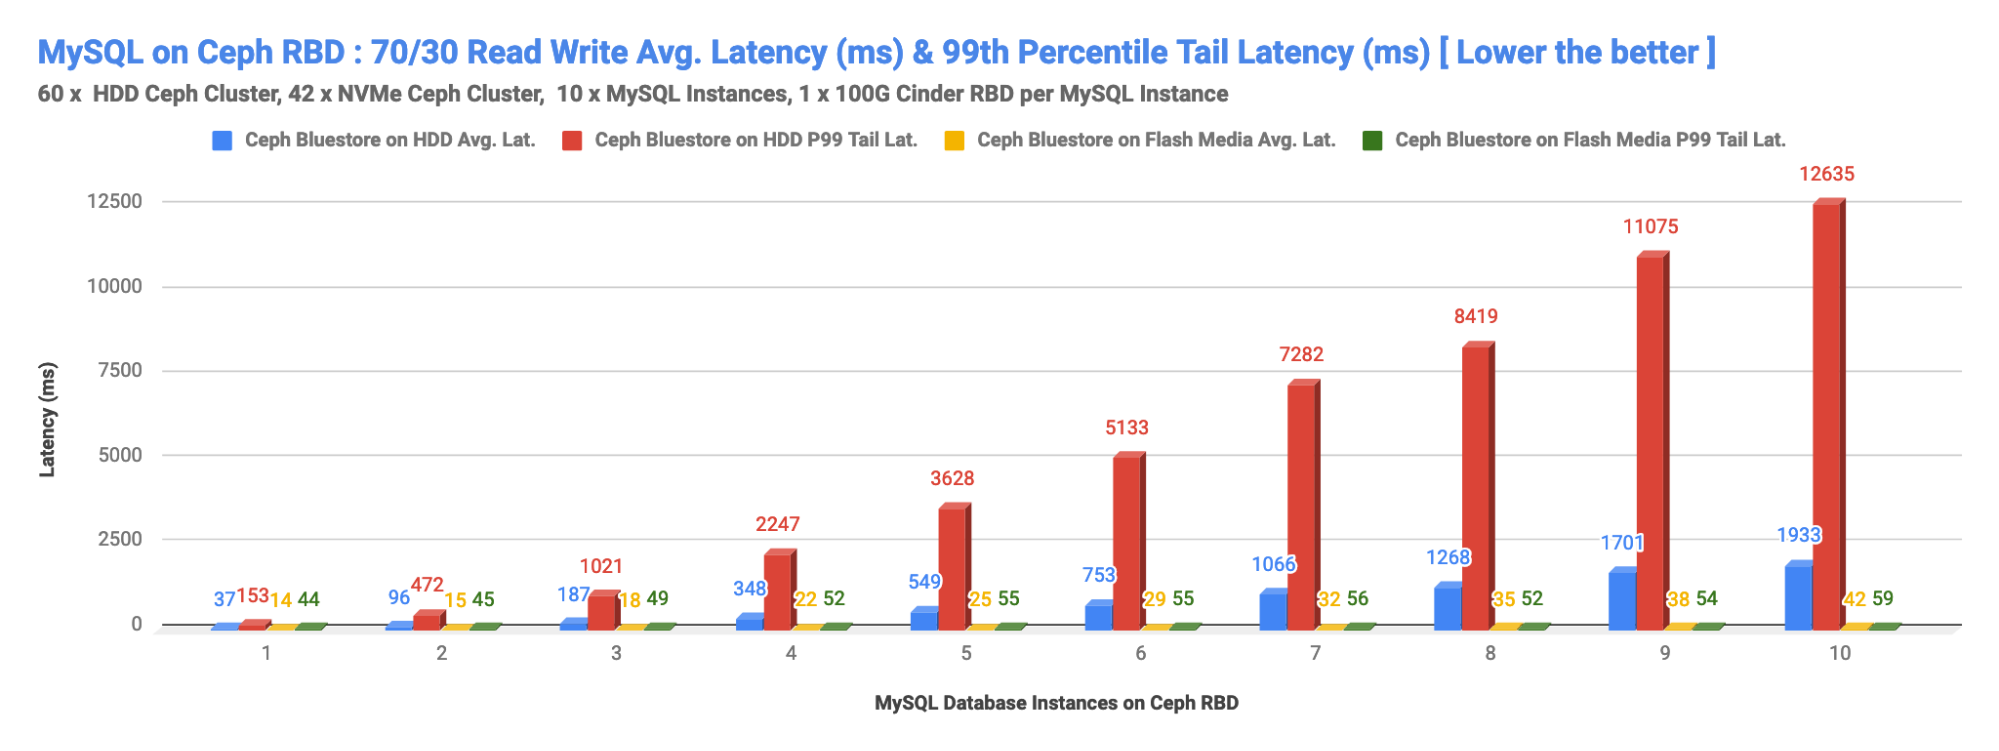 MySQL on Ceph RBD: 70/30 Read Write Average Latency (ms) & 99th Percentile Tail Latency (ms) (Lower the Better)